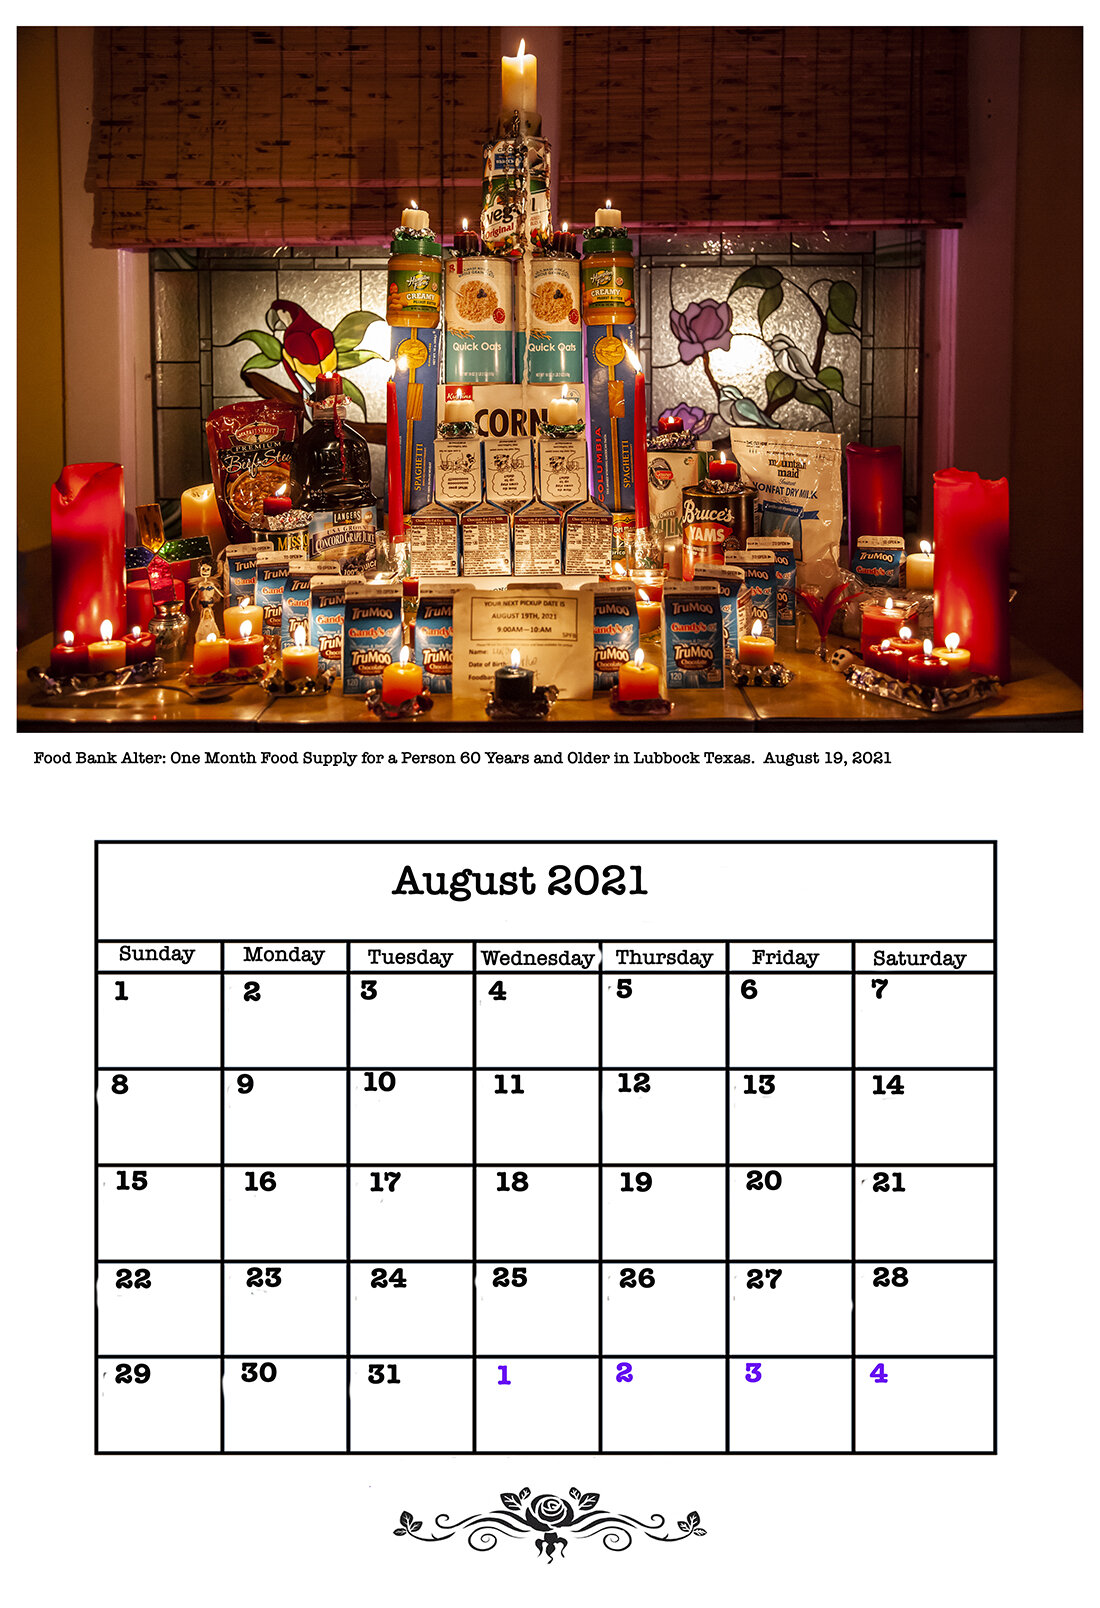 August 2021 Food Bank Calendar 